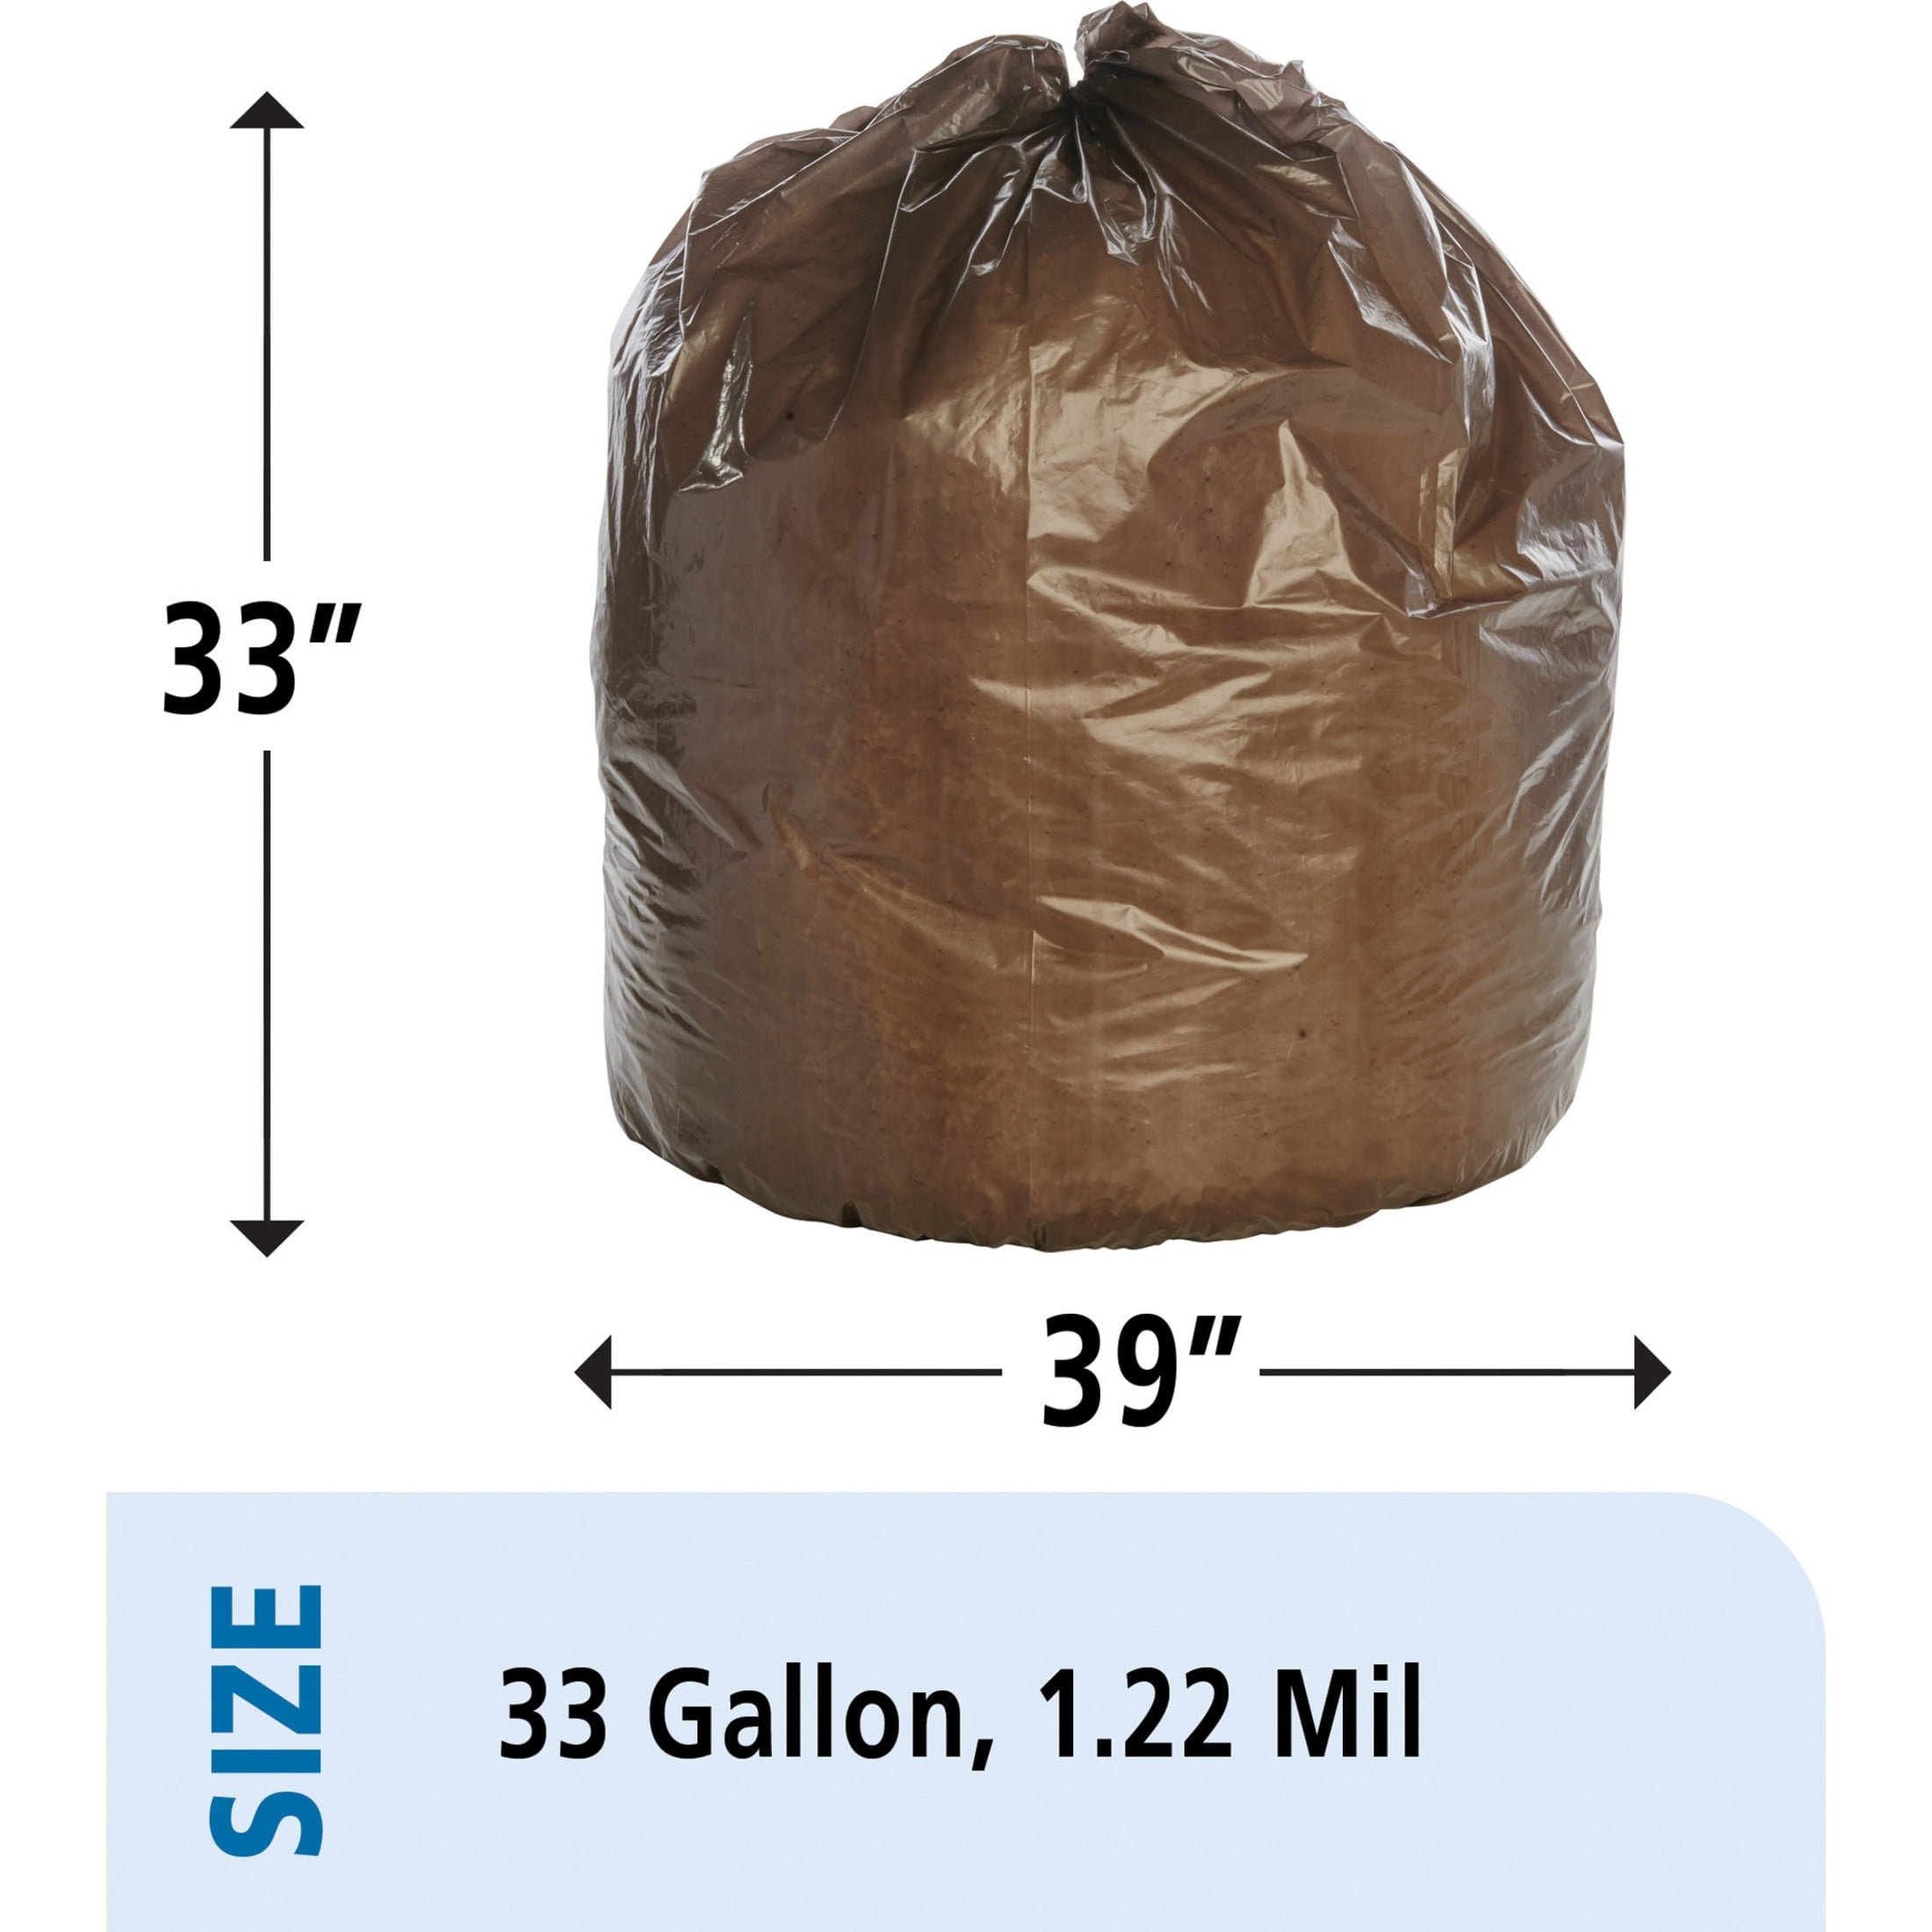  65-70 Gallon Heavy Duty Black Trash Bags, 1.7 Mil, 100